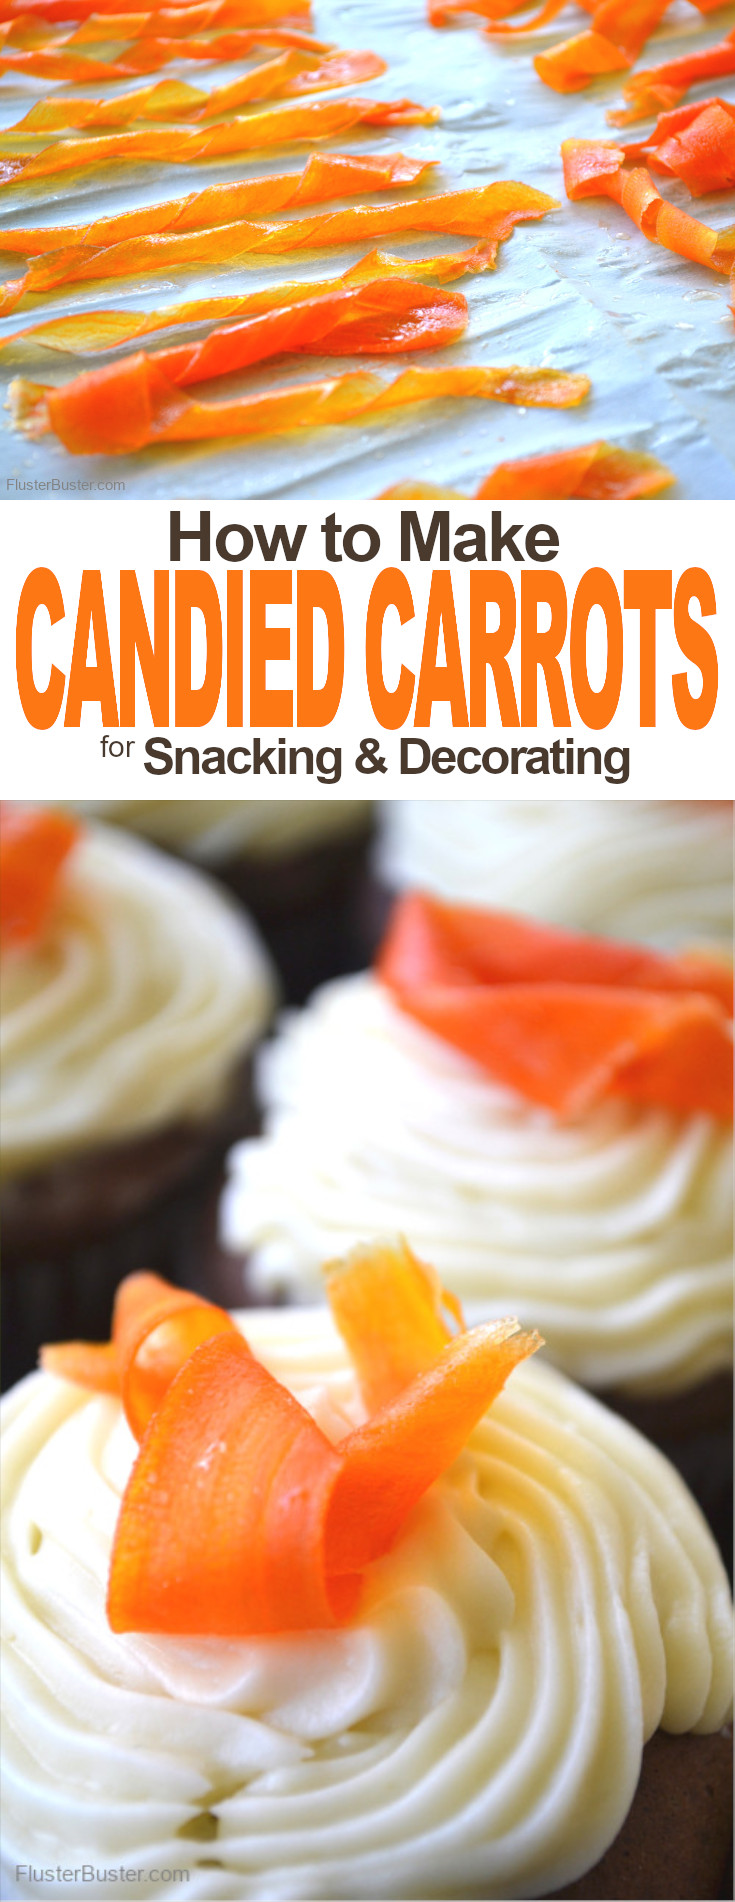 Best Carrot Cake Recipe - How To Make Carrot Cake